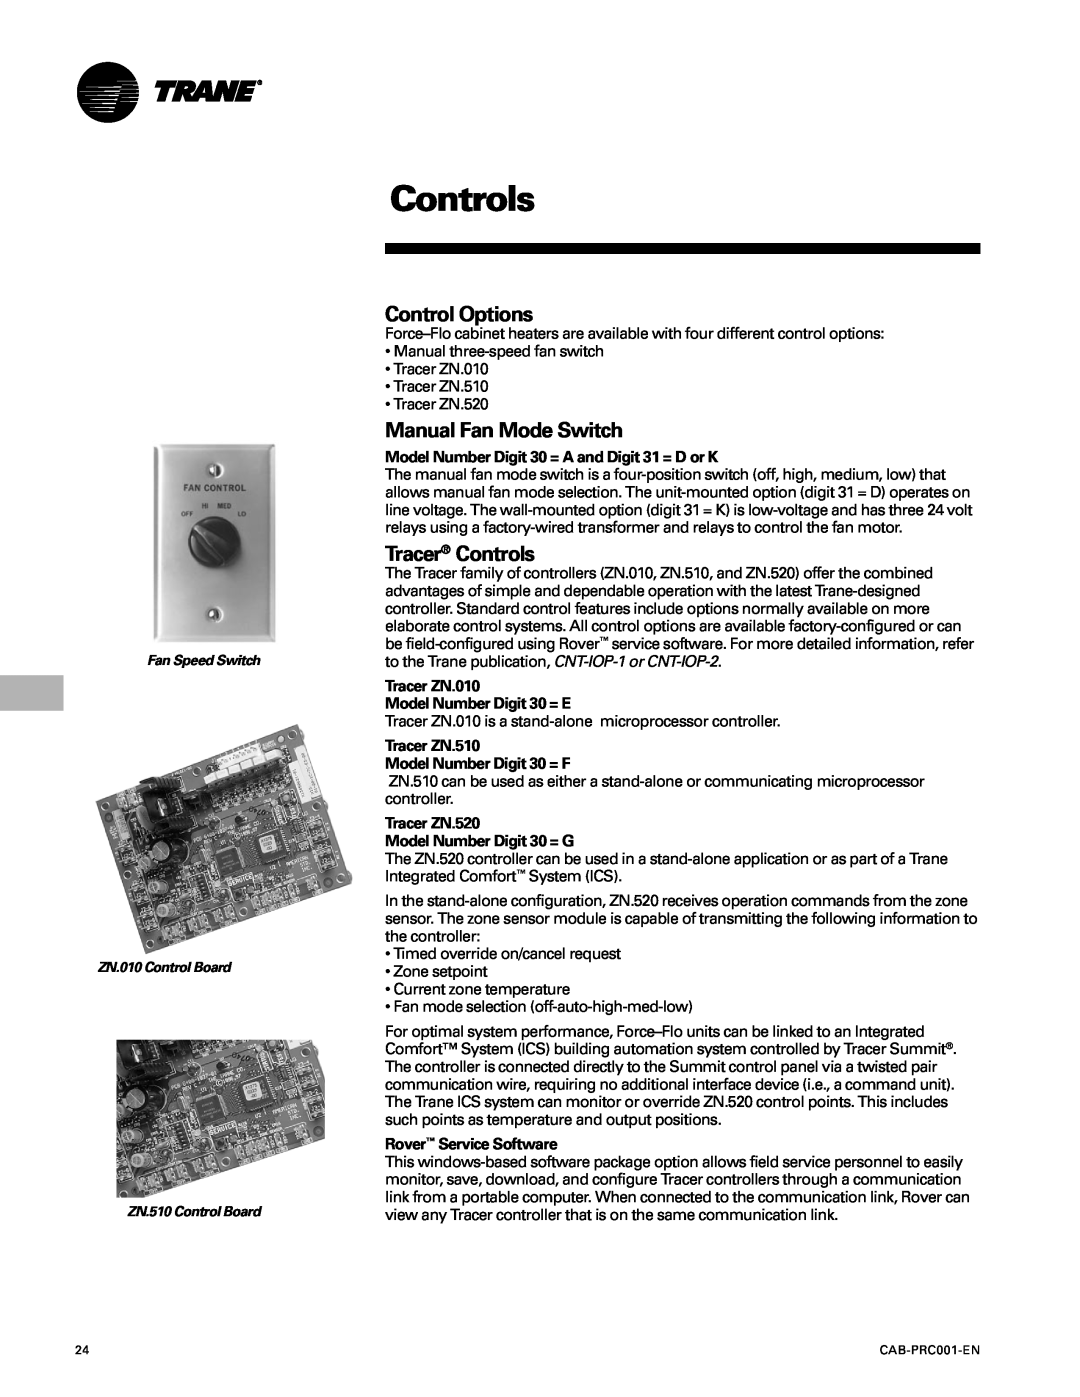 Trane CAB-PRC001-EN manual Control Options, Manual Fan Mode Switch, Tracer Controls 